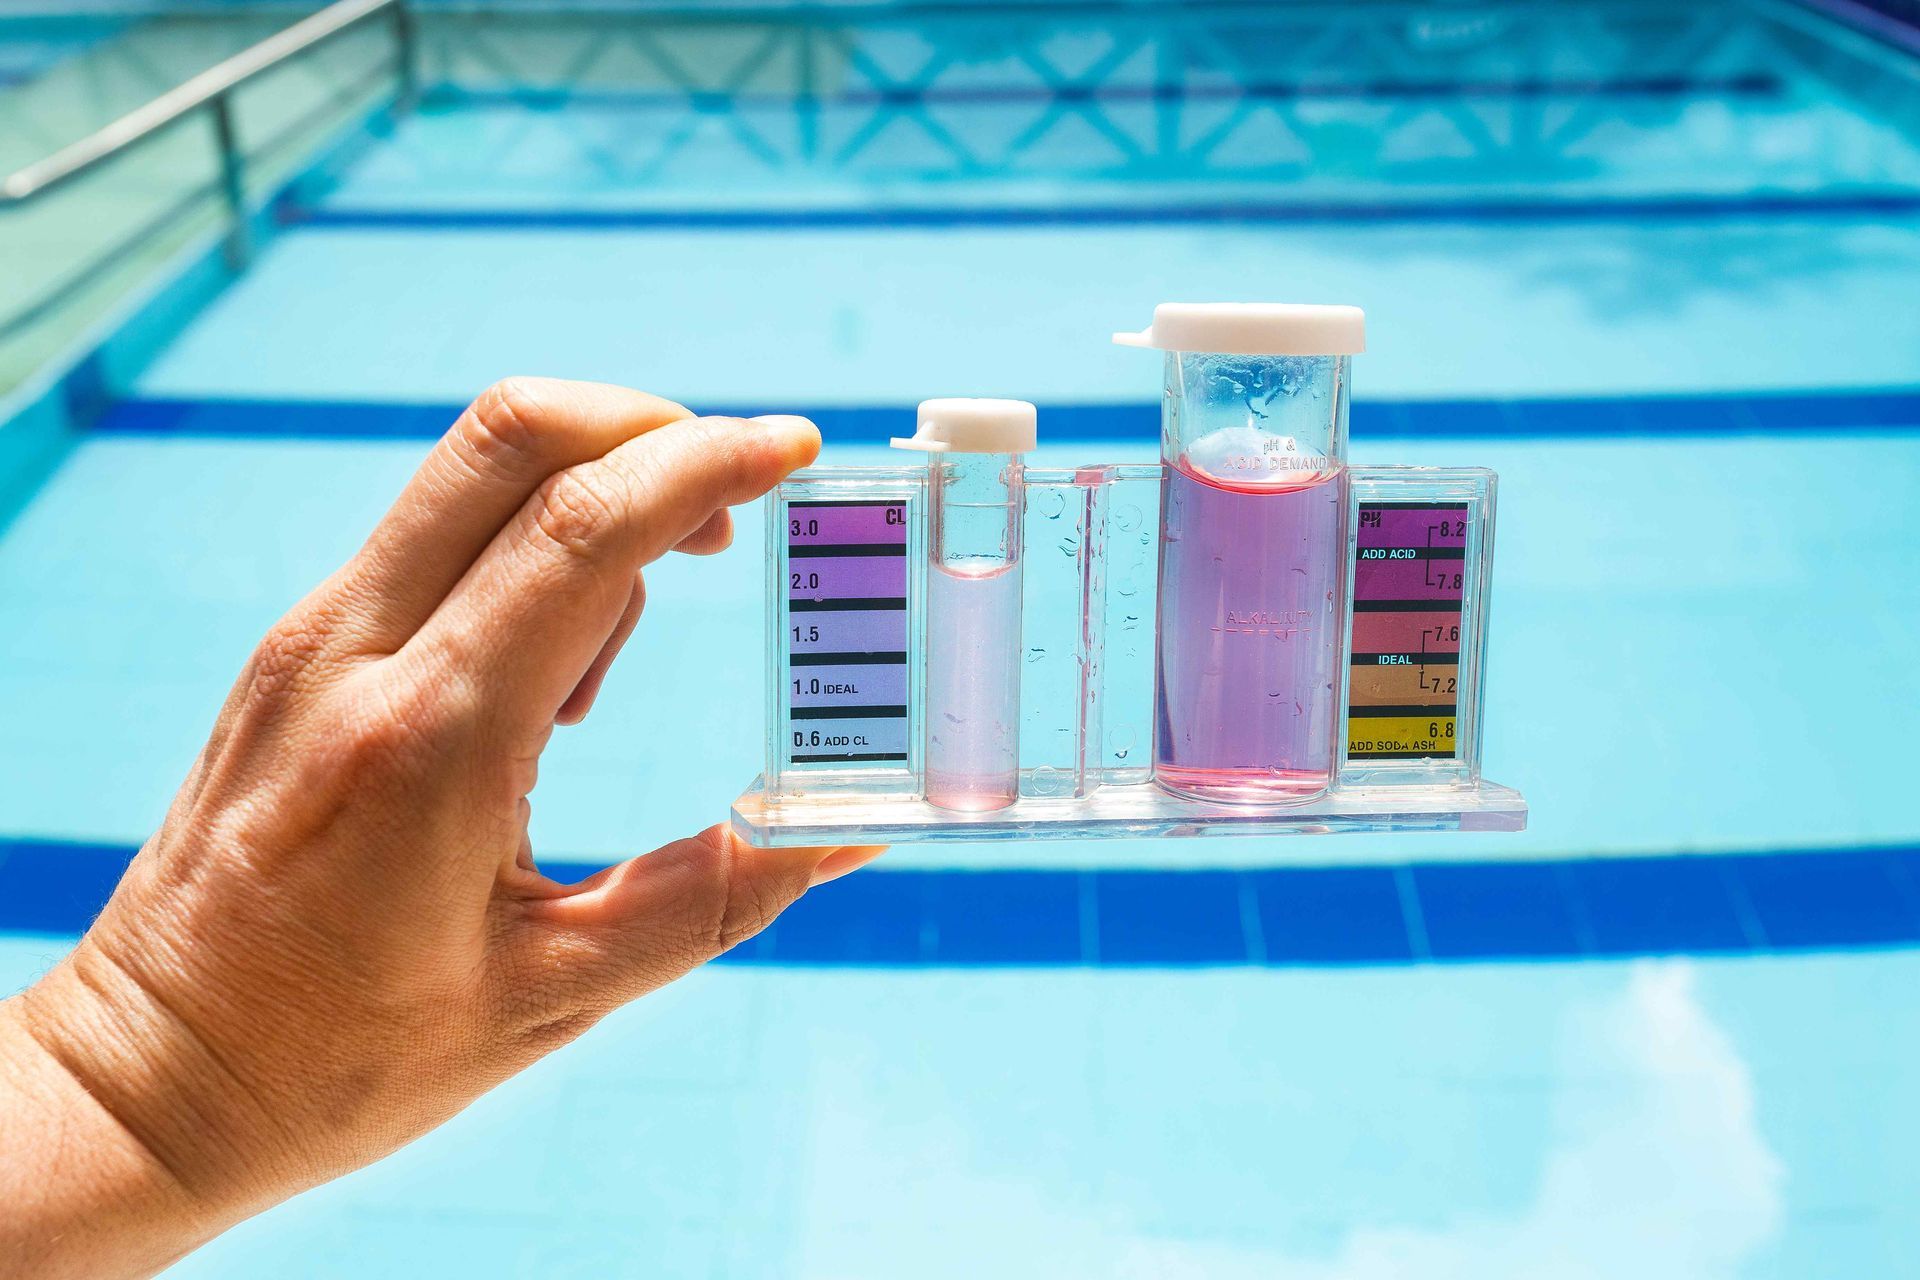 Swimming pool chemical measurements and testing kit